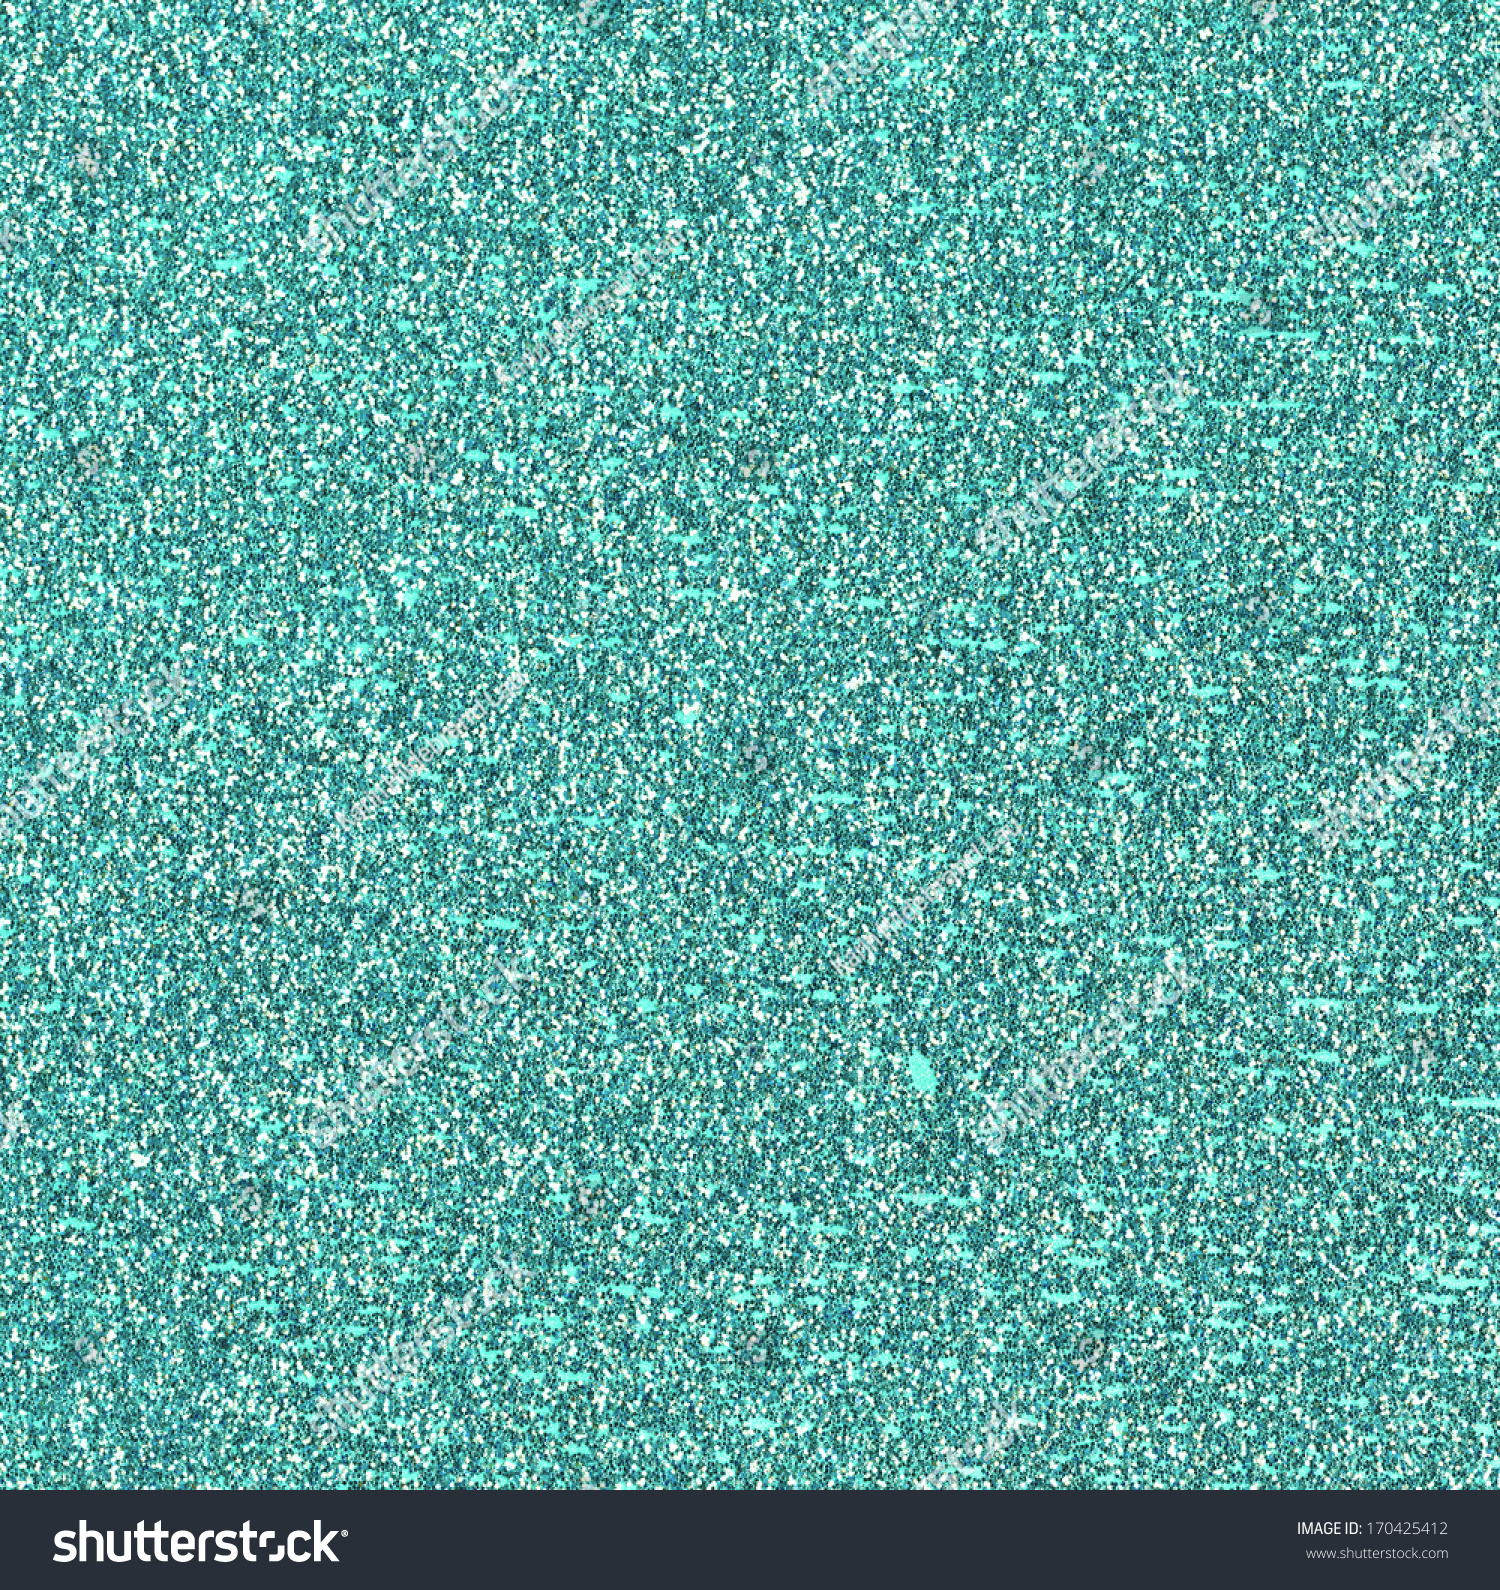 Teal Glitter Background Stock Photo (Edit Now) 170425412 - Shutterstock